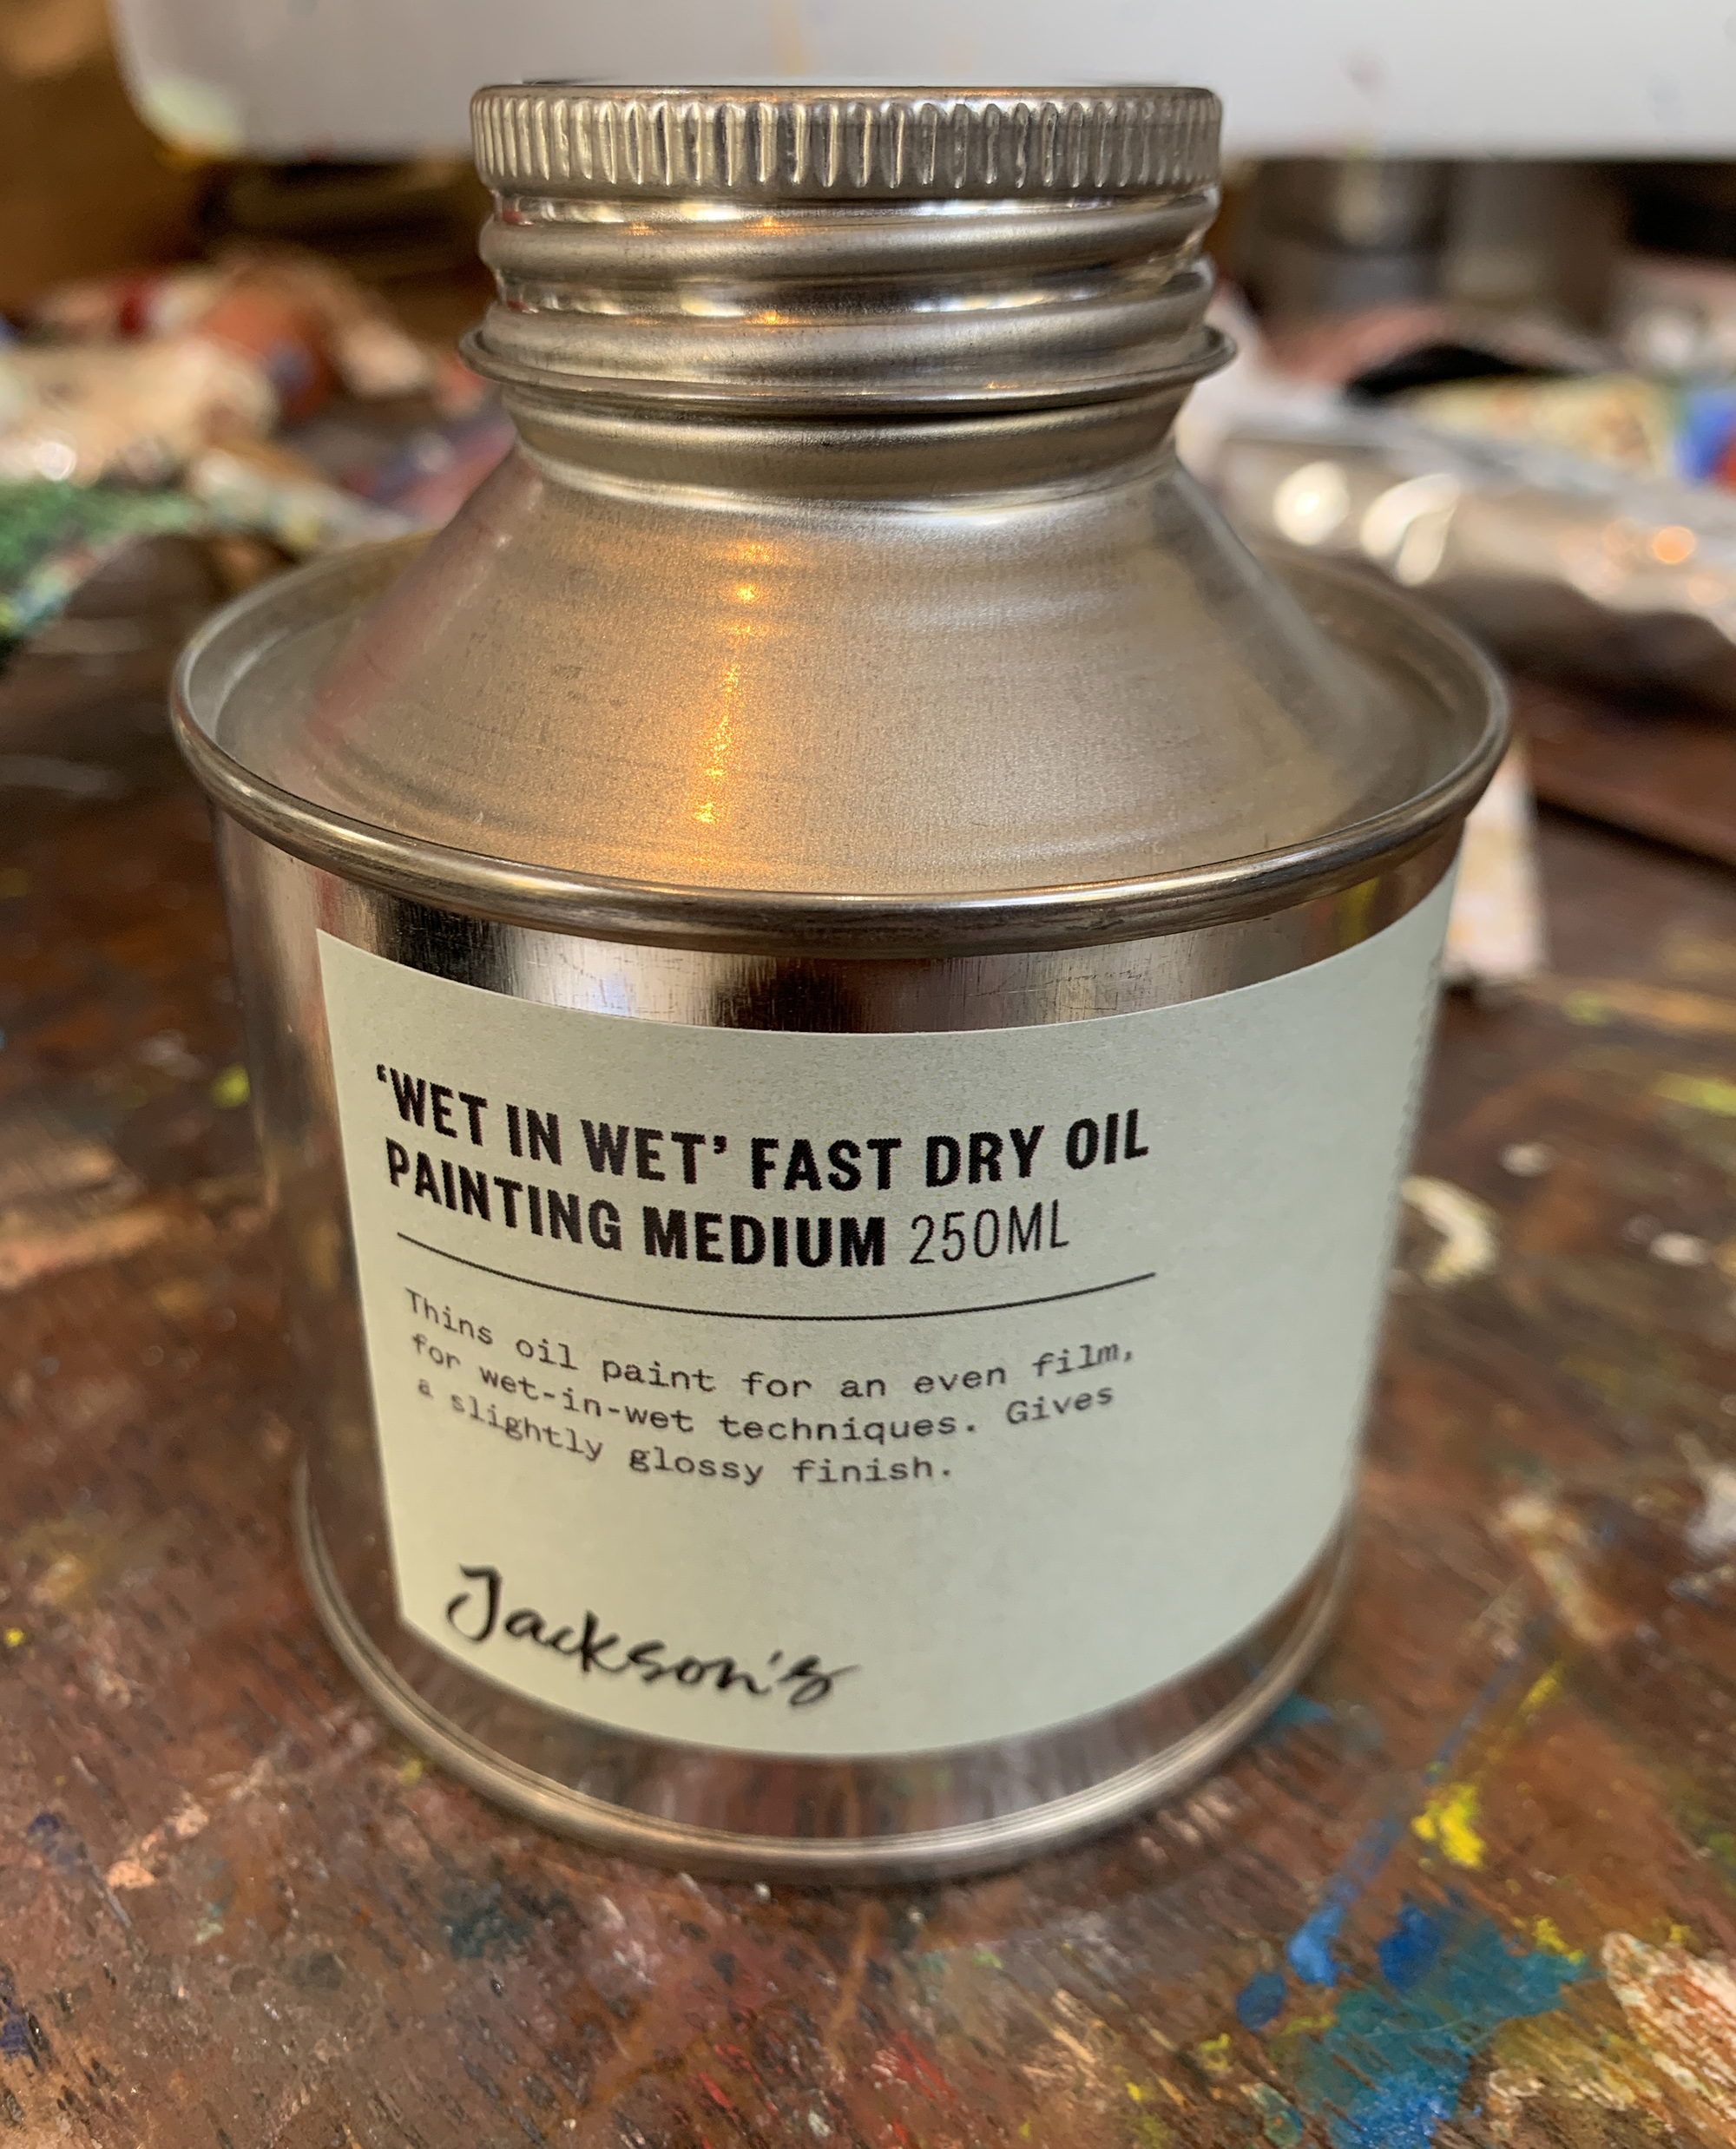 Jackson's Wet in Wet Fast Dry Oil Painting Medium